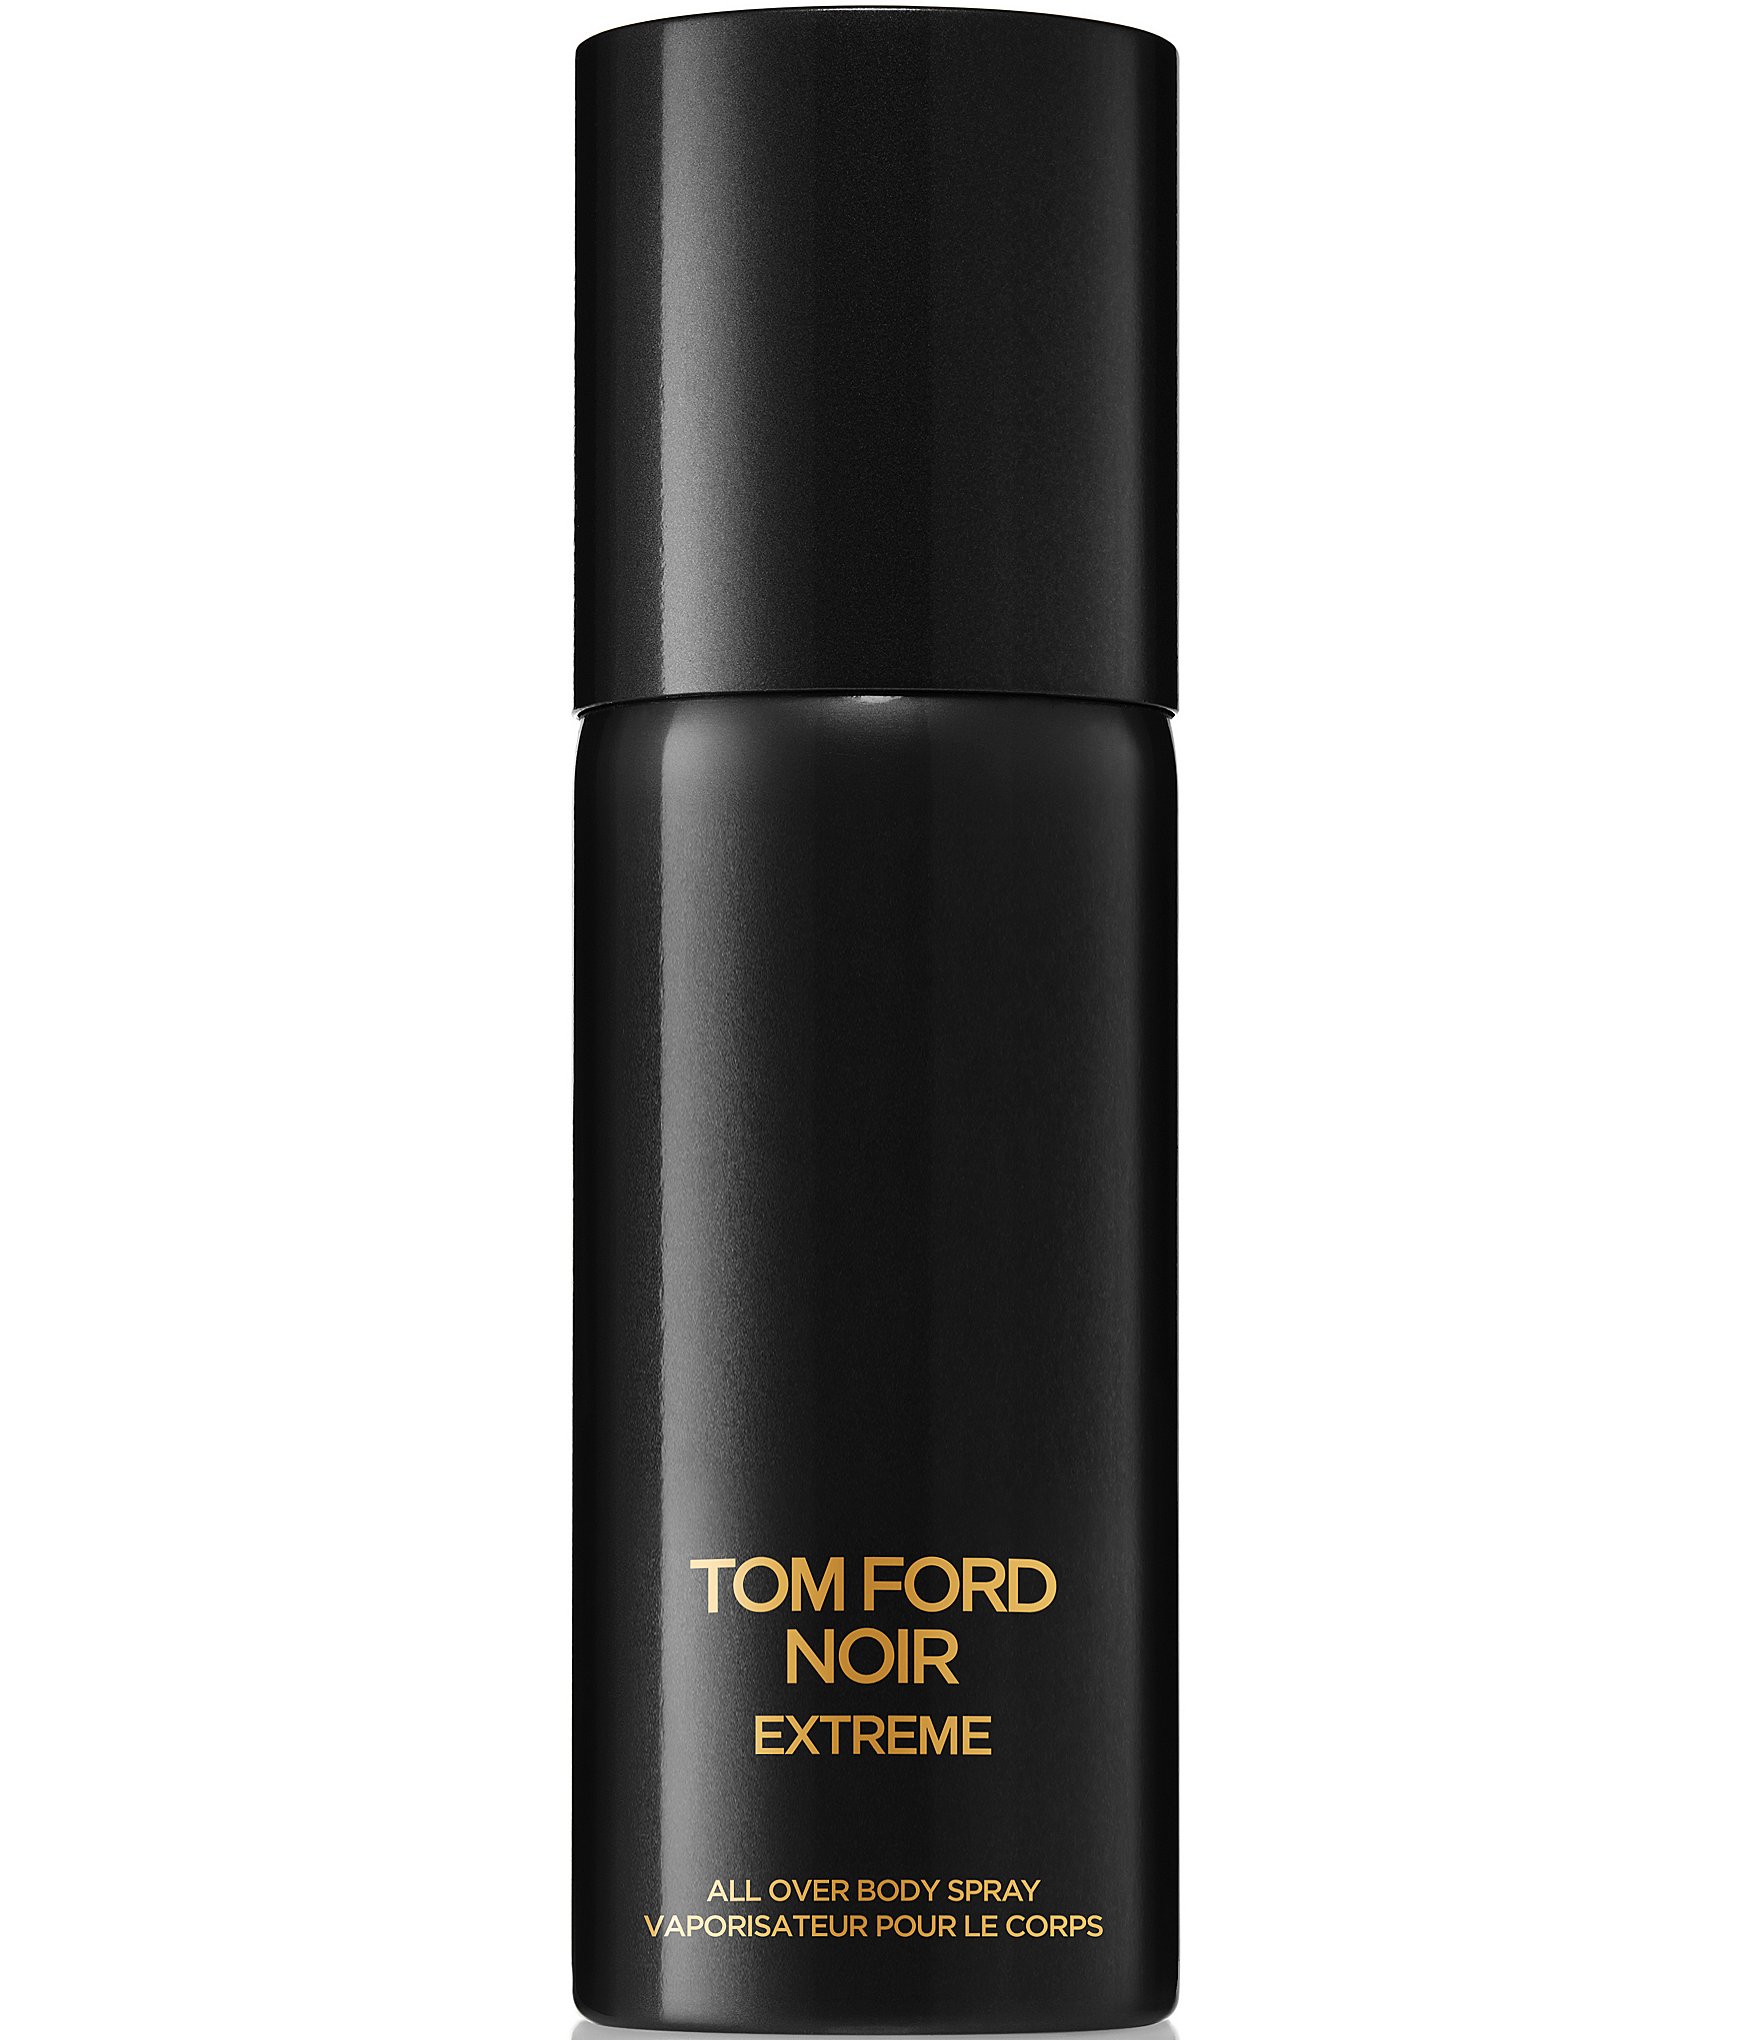 TOM FORD Noir Extreme All Over Body Spray | Dillard's